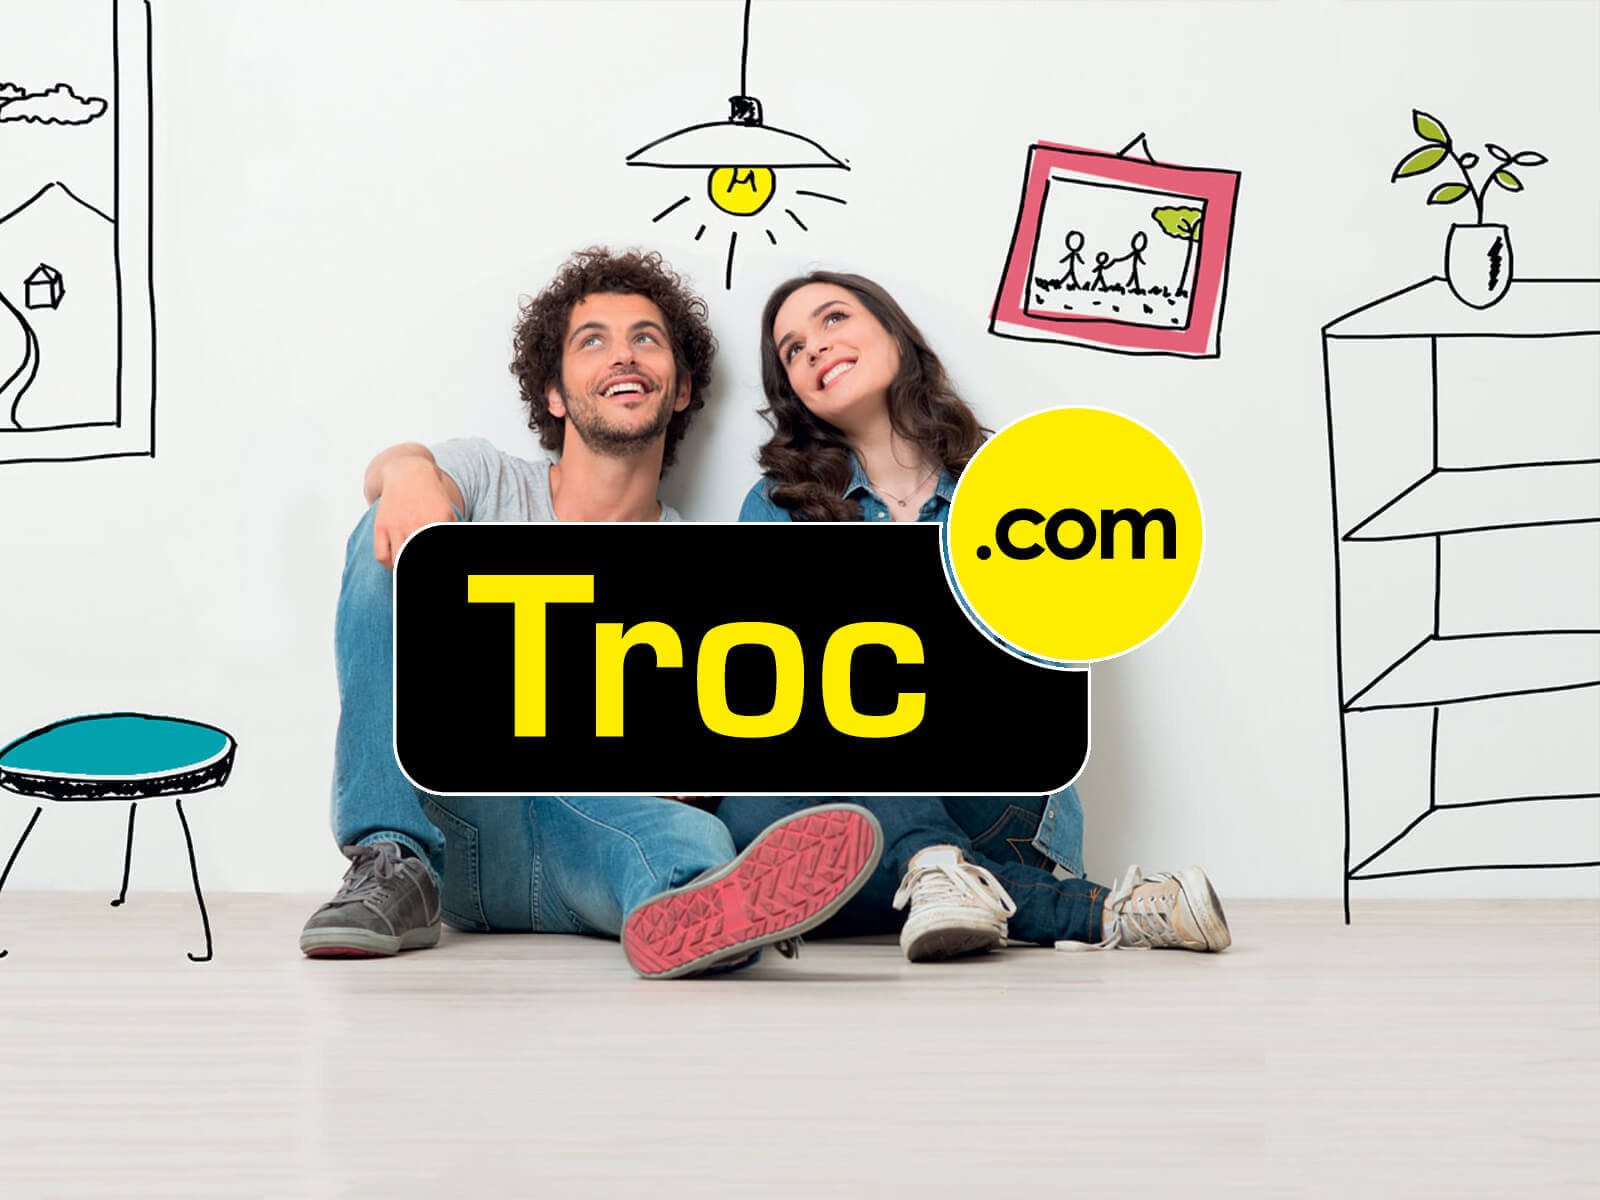 (c) Troc.com